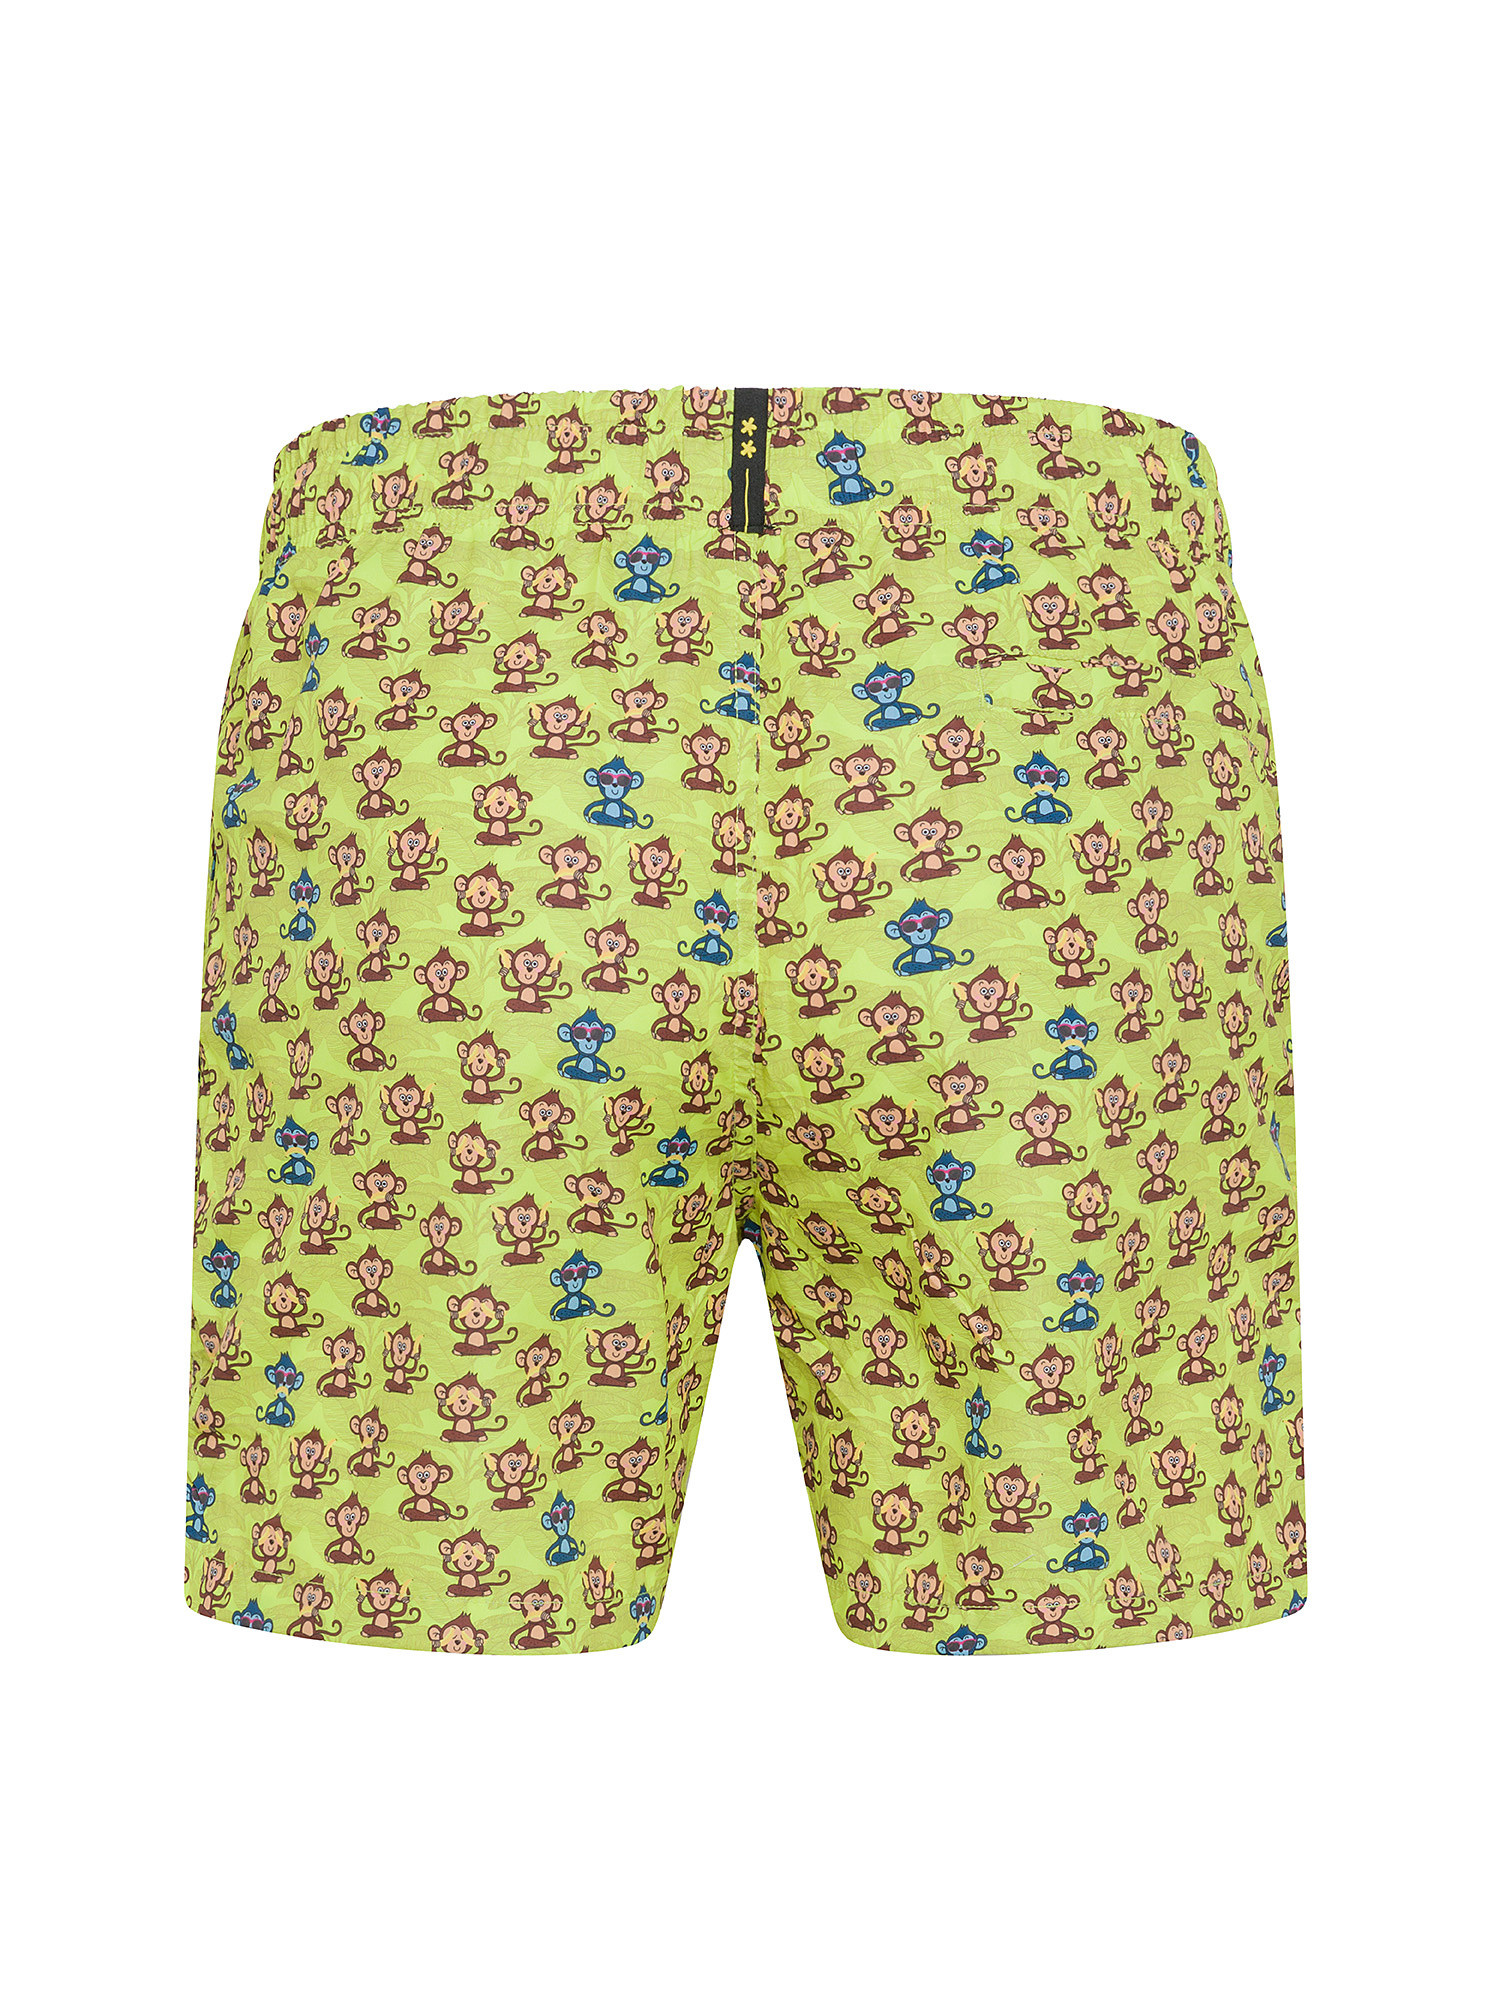 F**K - Patterned swim shorts, Yellow, large image number 1